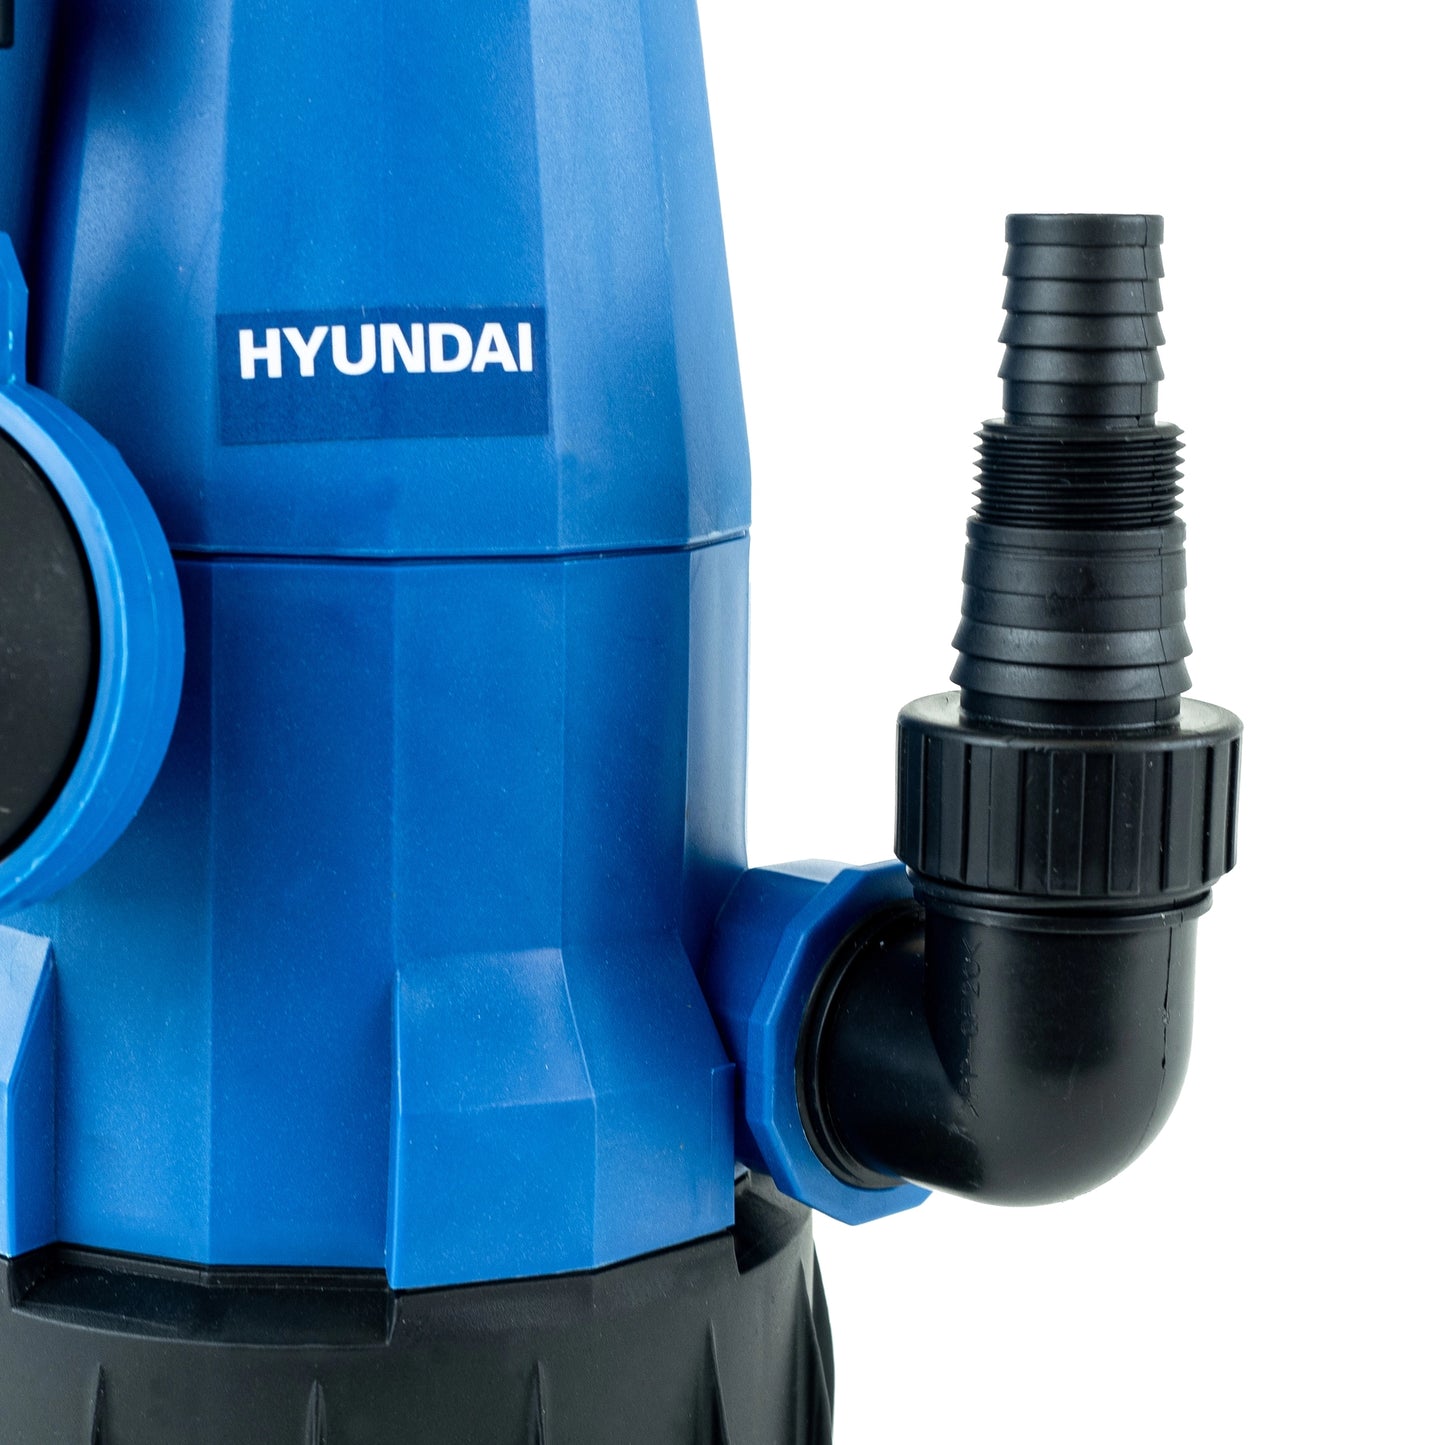 Hyundai HYSP550CD Electric Clean & Dirty Water Sub Pump